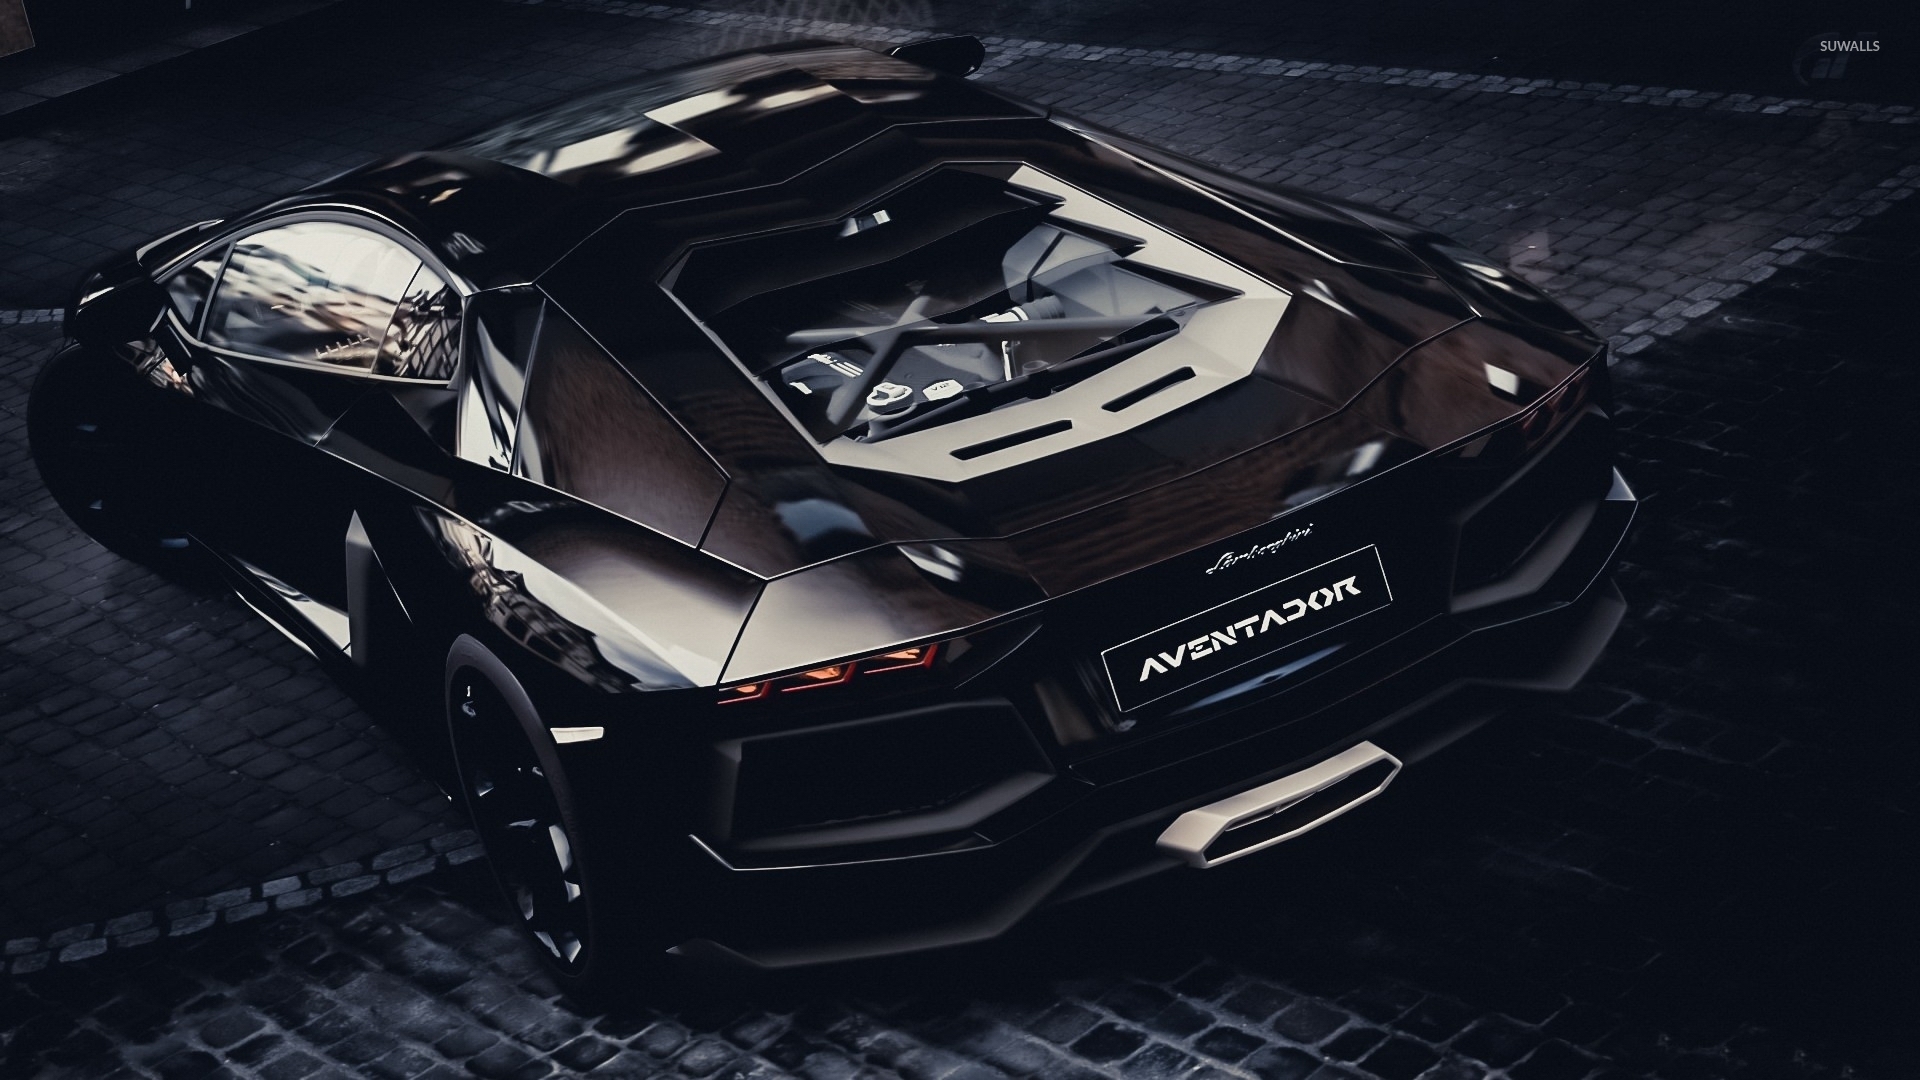 Top view of a black Lamborghini Aventador wallpaper - Car wallpapers